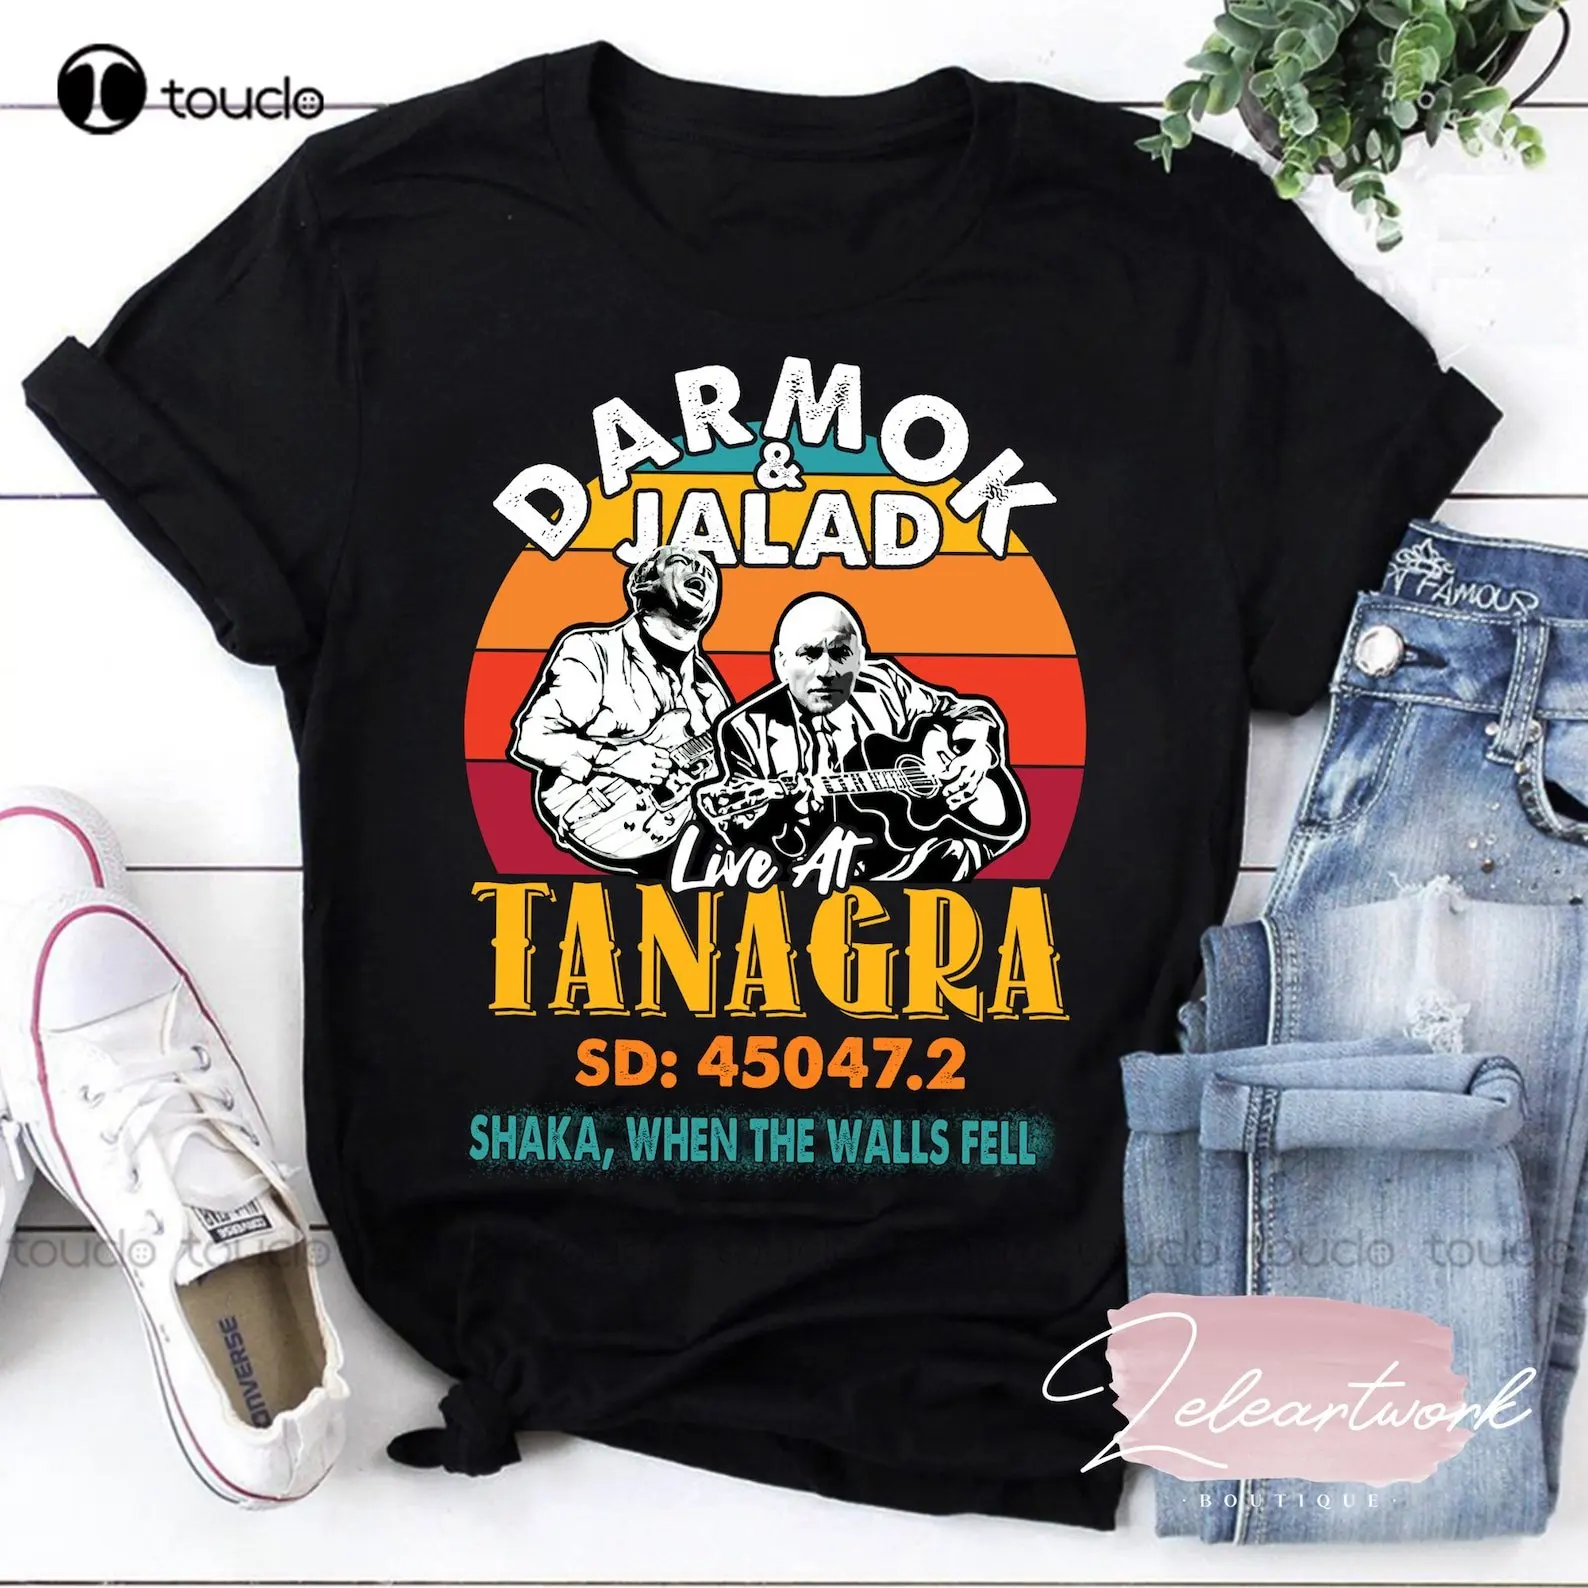 Darmok And Jalad At Tanagra September 1991 Vintage Funny T-Shirt Funny T Shirts Printed Tee Custom Gift Xs-5Xl Streetwear